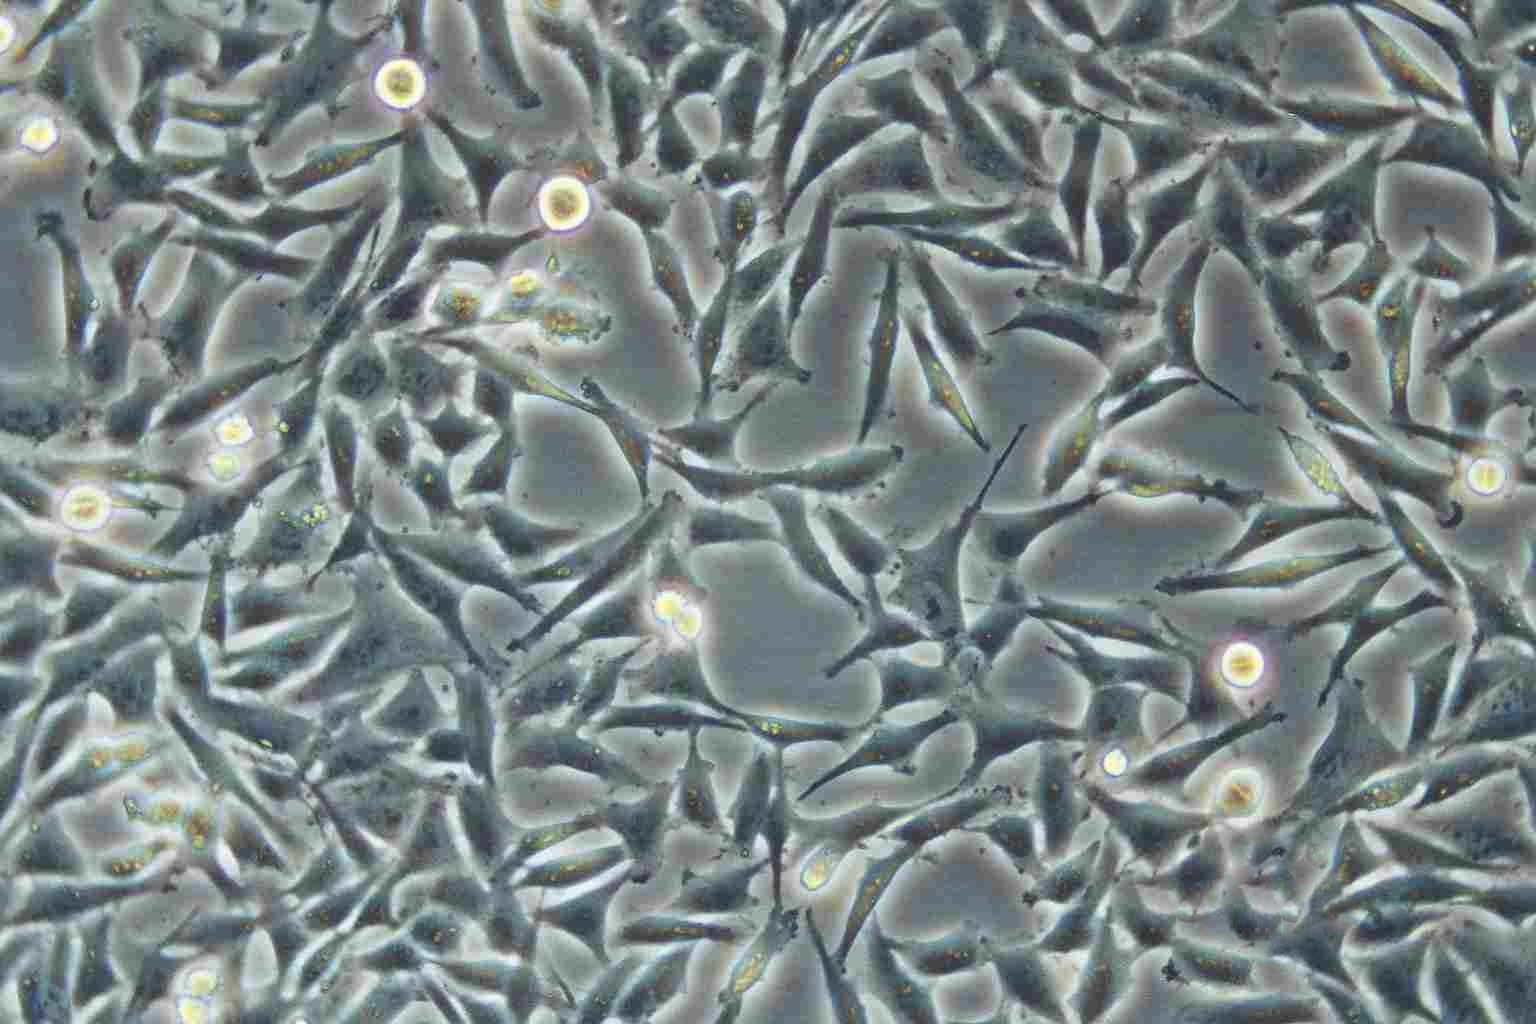 SW756 epithelioid cells人子宫鳞状癌细胞系